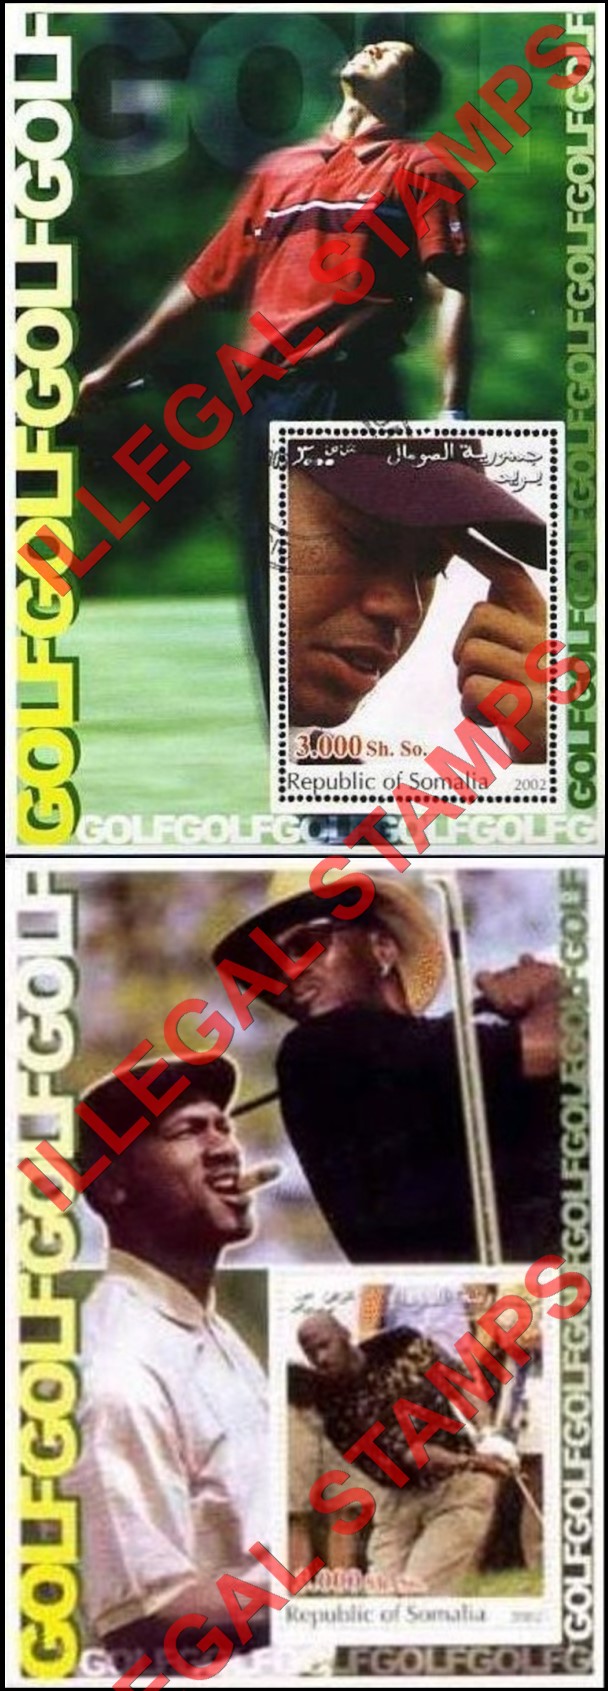 Somalia 2002 Golf Illegal Stamp Souvenir Sheets of 1